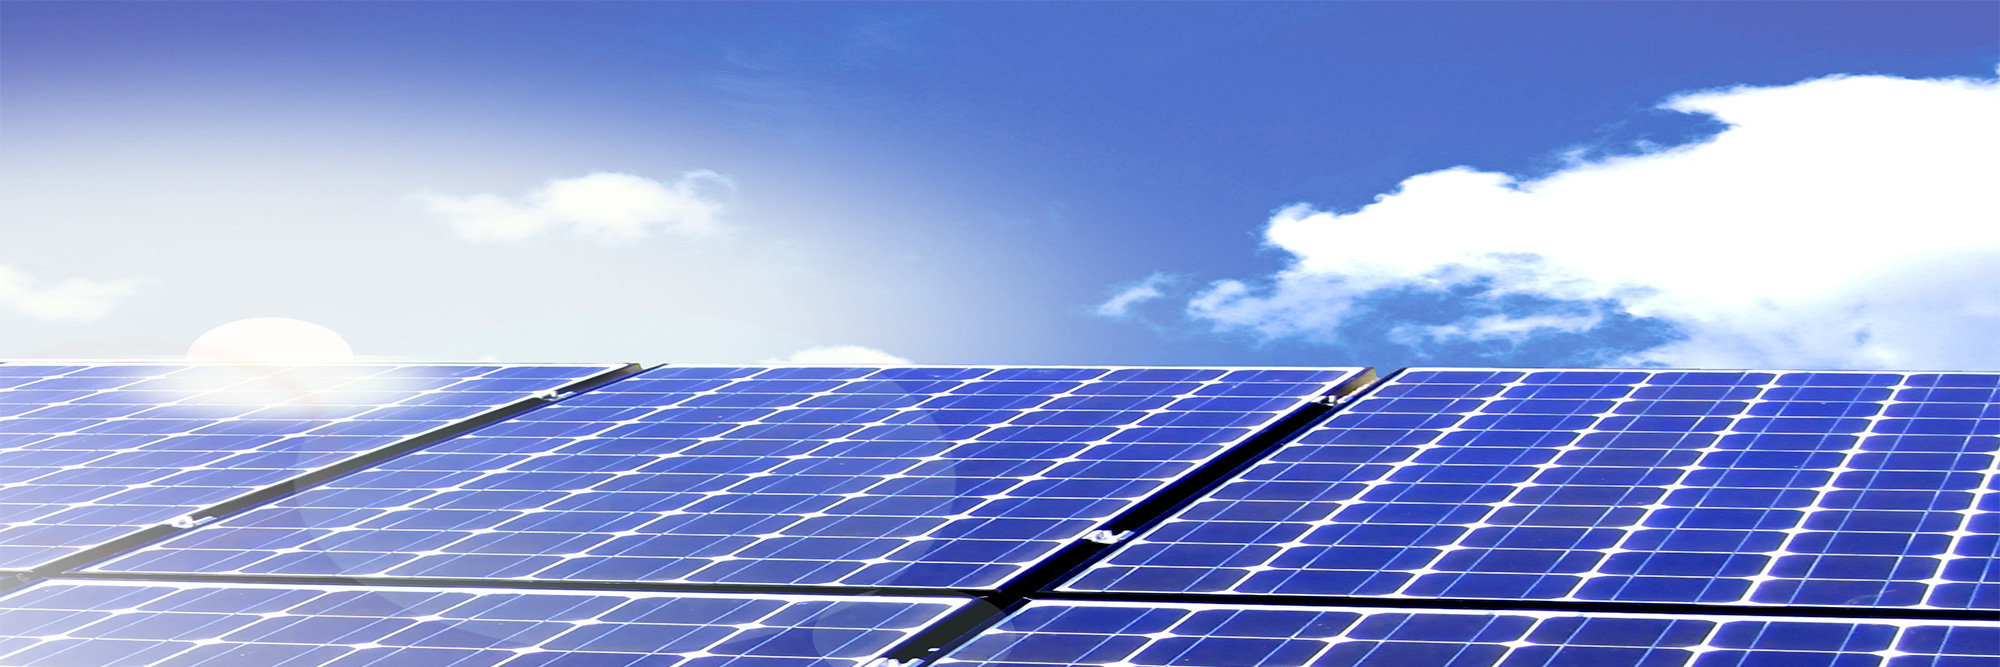 N.T.net manutenzione e pulizia impianti fotovoltaici